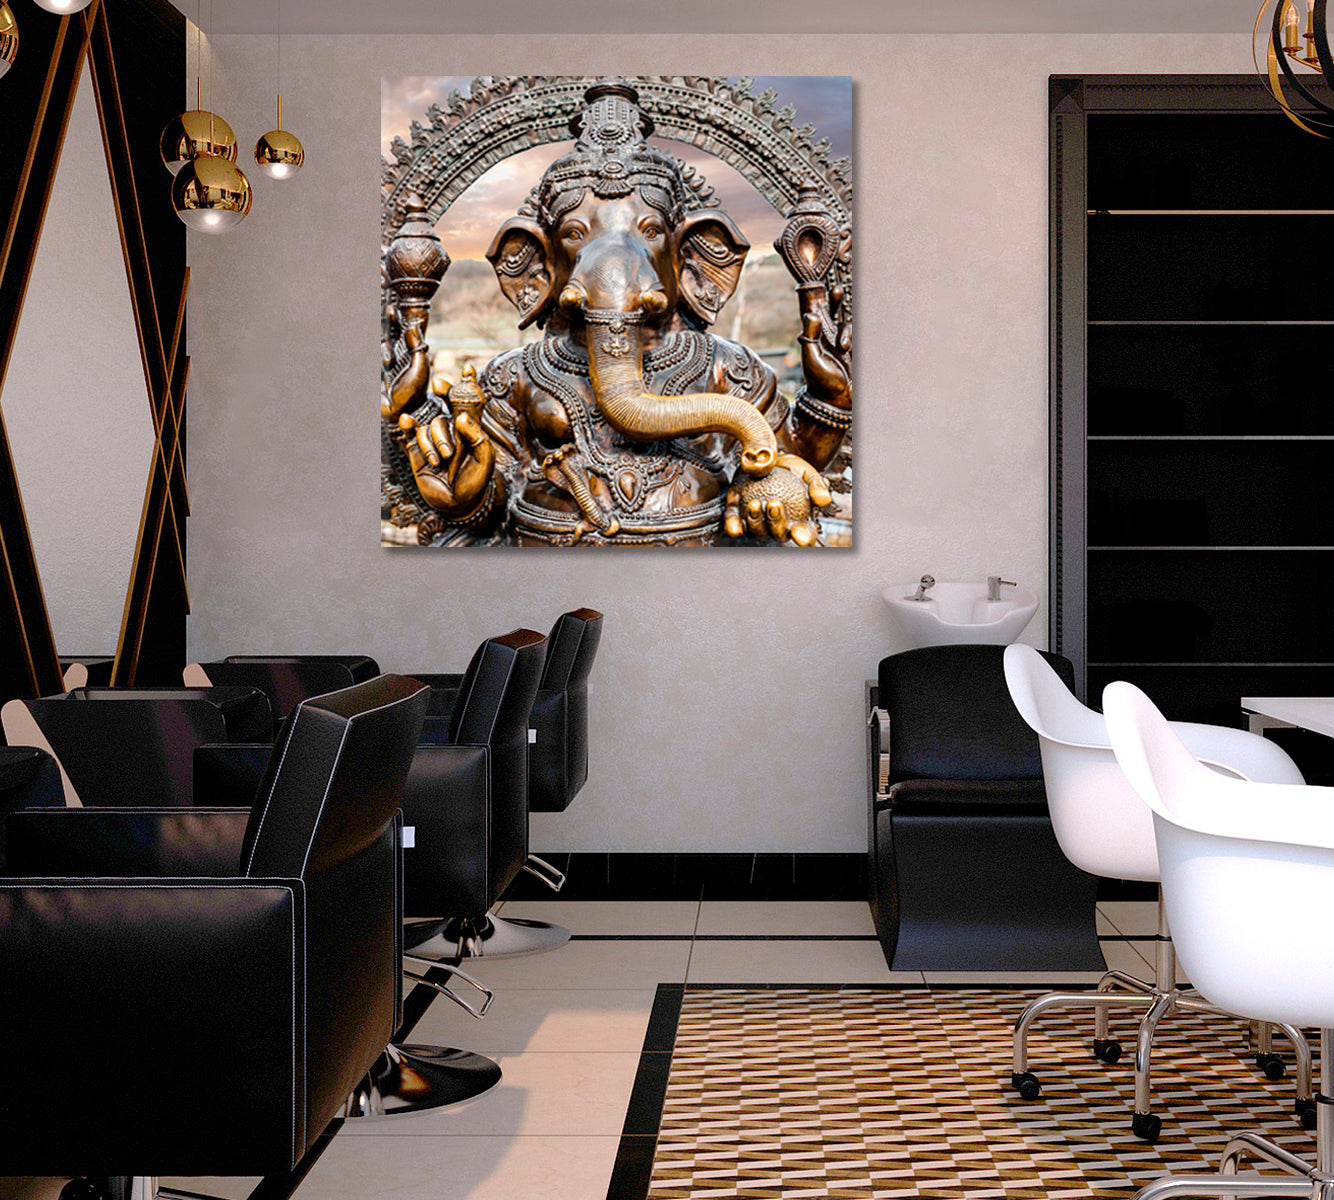 Statue of Hindu Elephant God Ganesha Dramatic Sky - Square Panel Religious Modern Art Artesty   